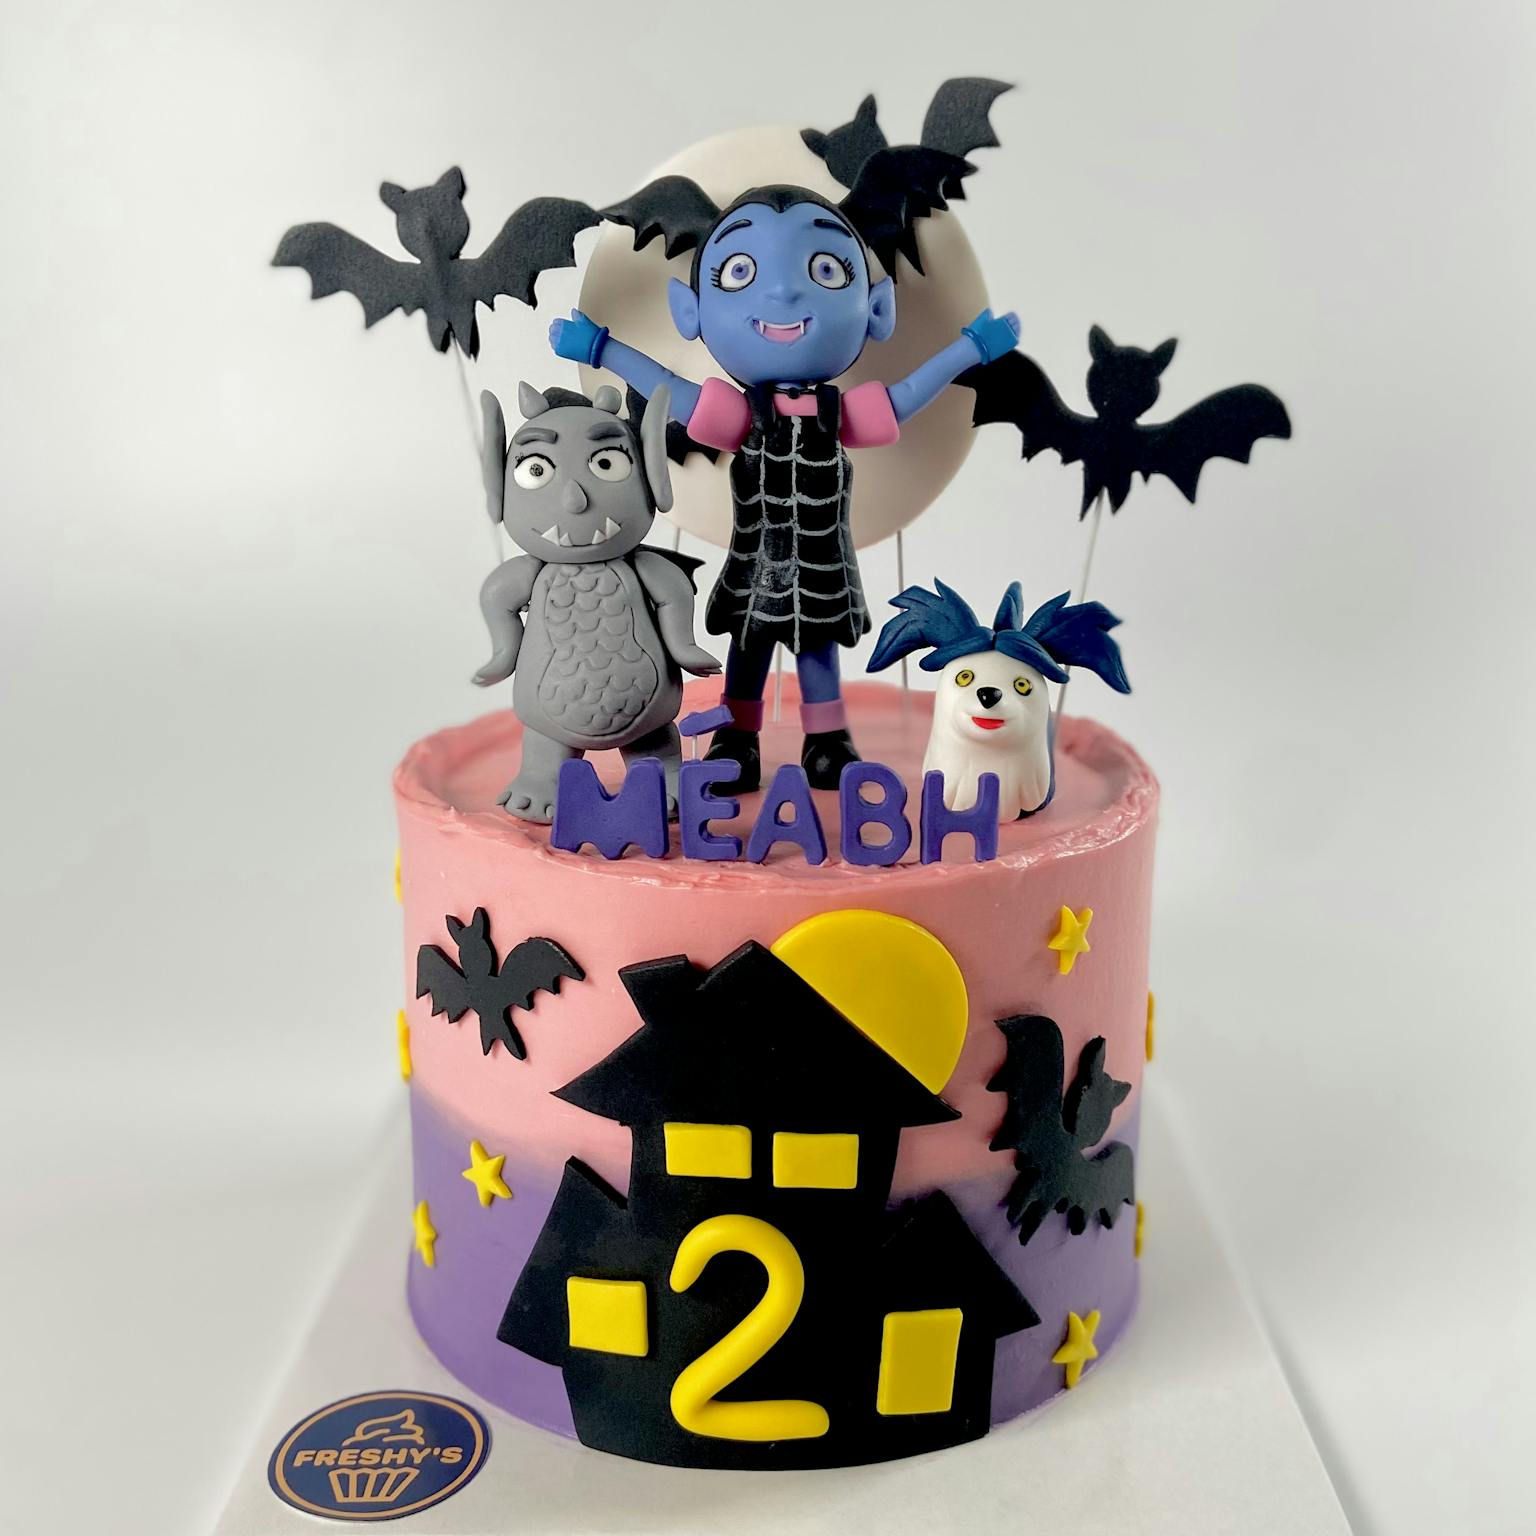 100% edible fondant sculpted Vampirina themed birthday cake